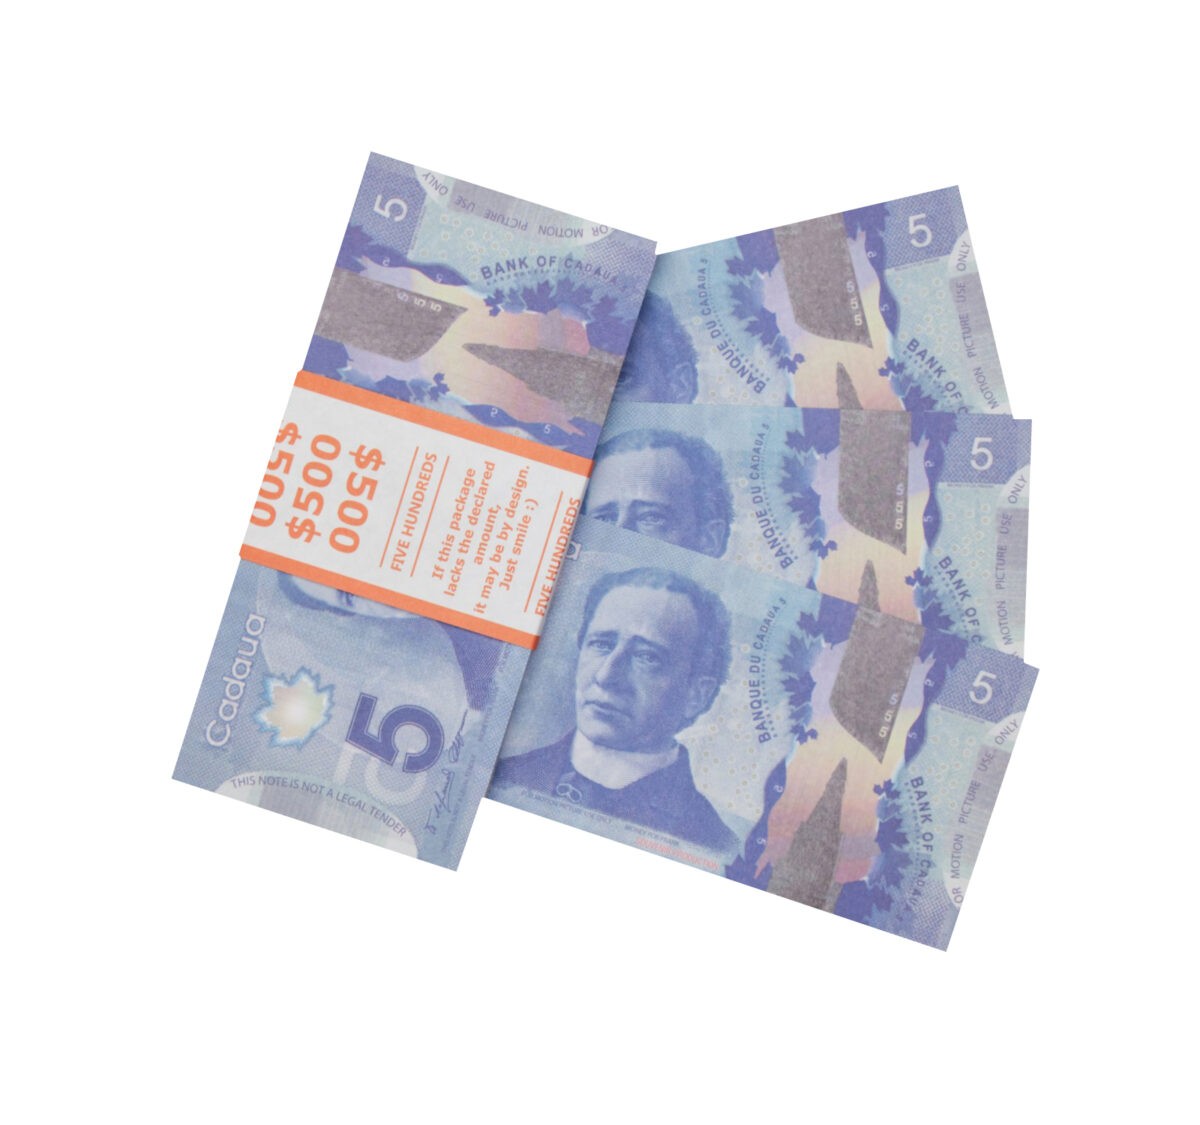 5 Canadian dollars prop money stack